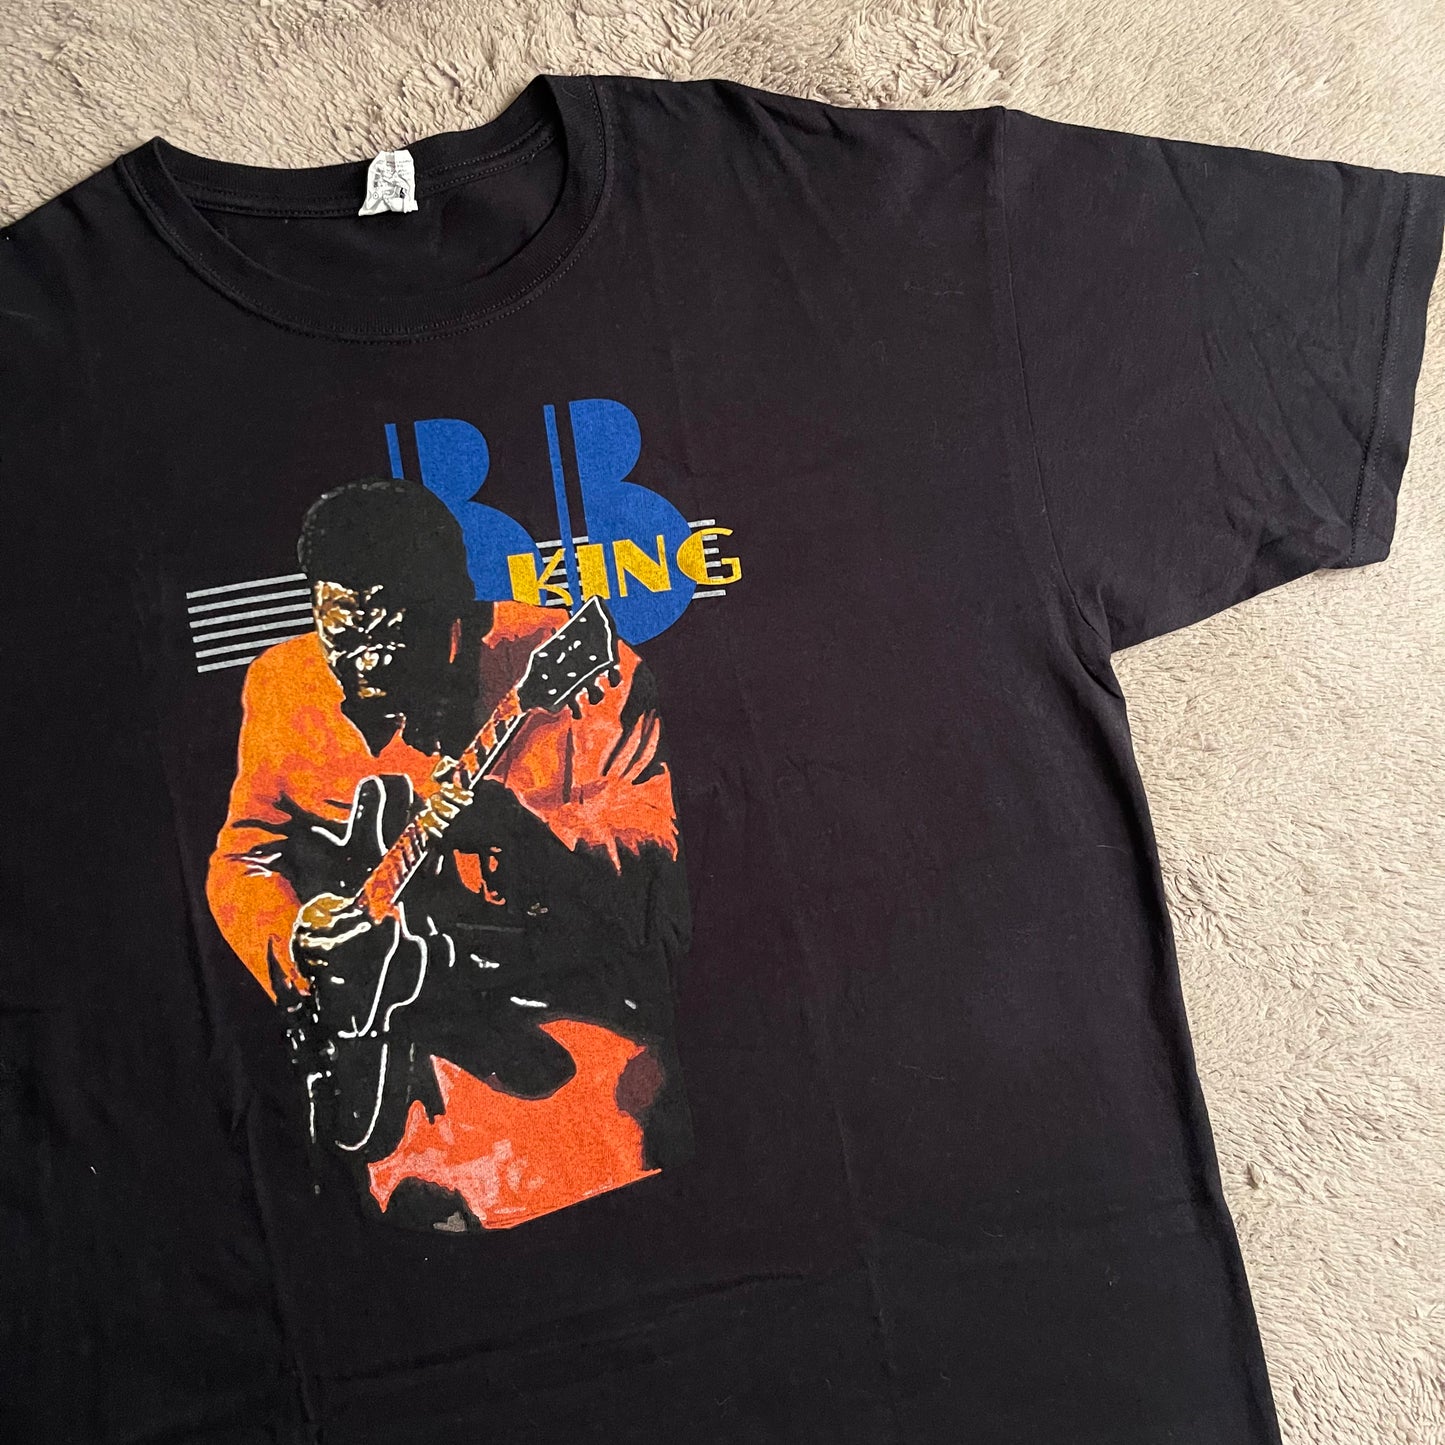 B.B. King on Tour Tee (XL)